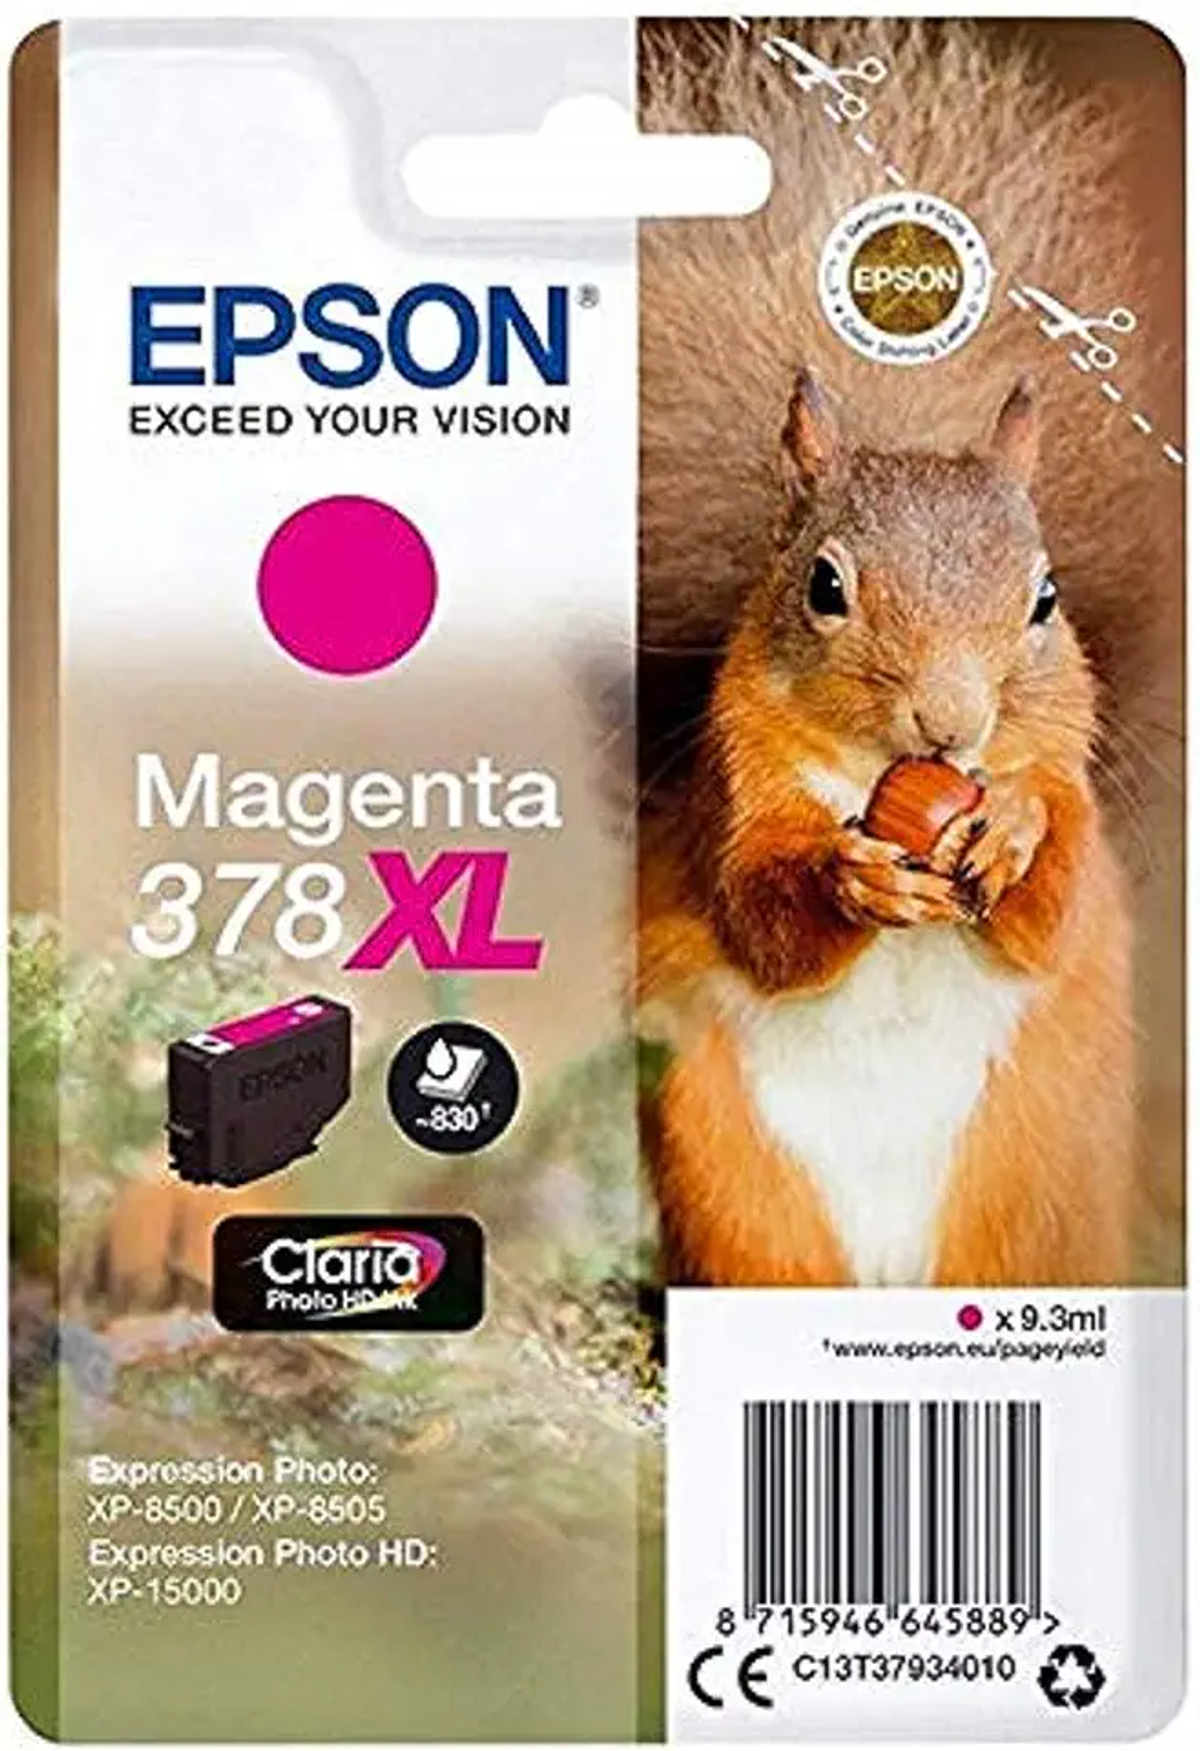 EPSON 378XL Tinte magenta (C13T37934010)